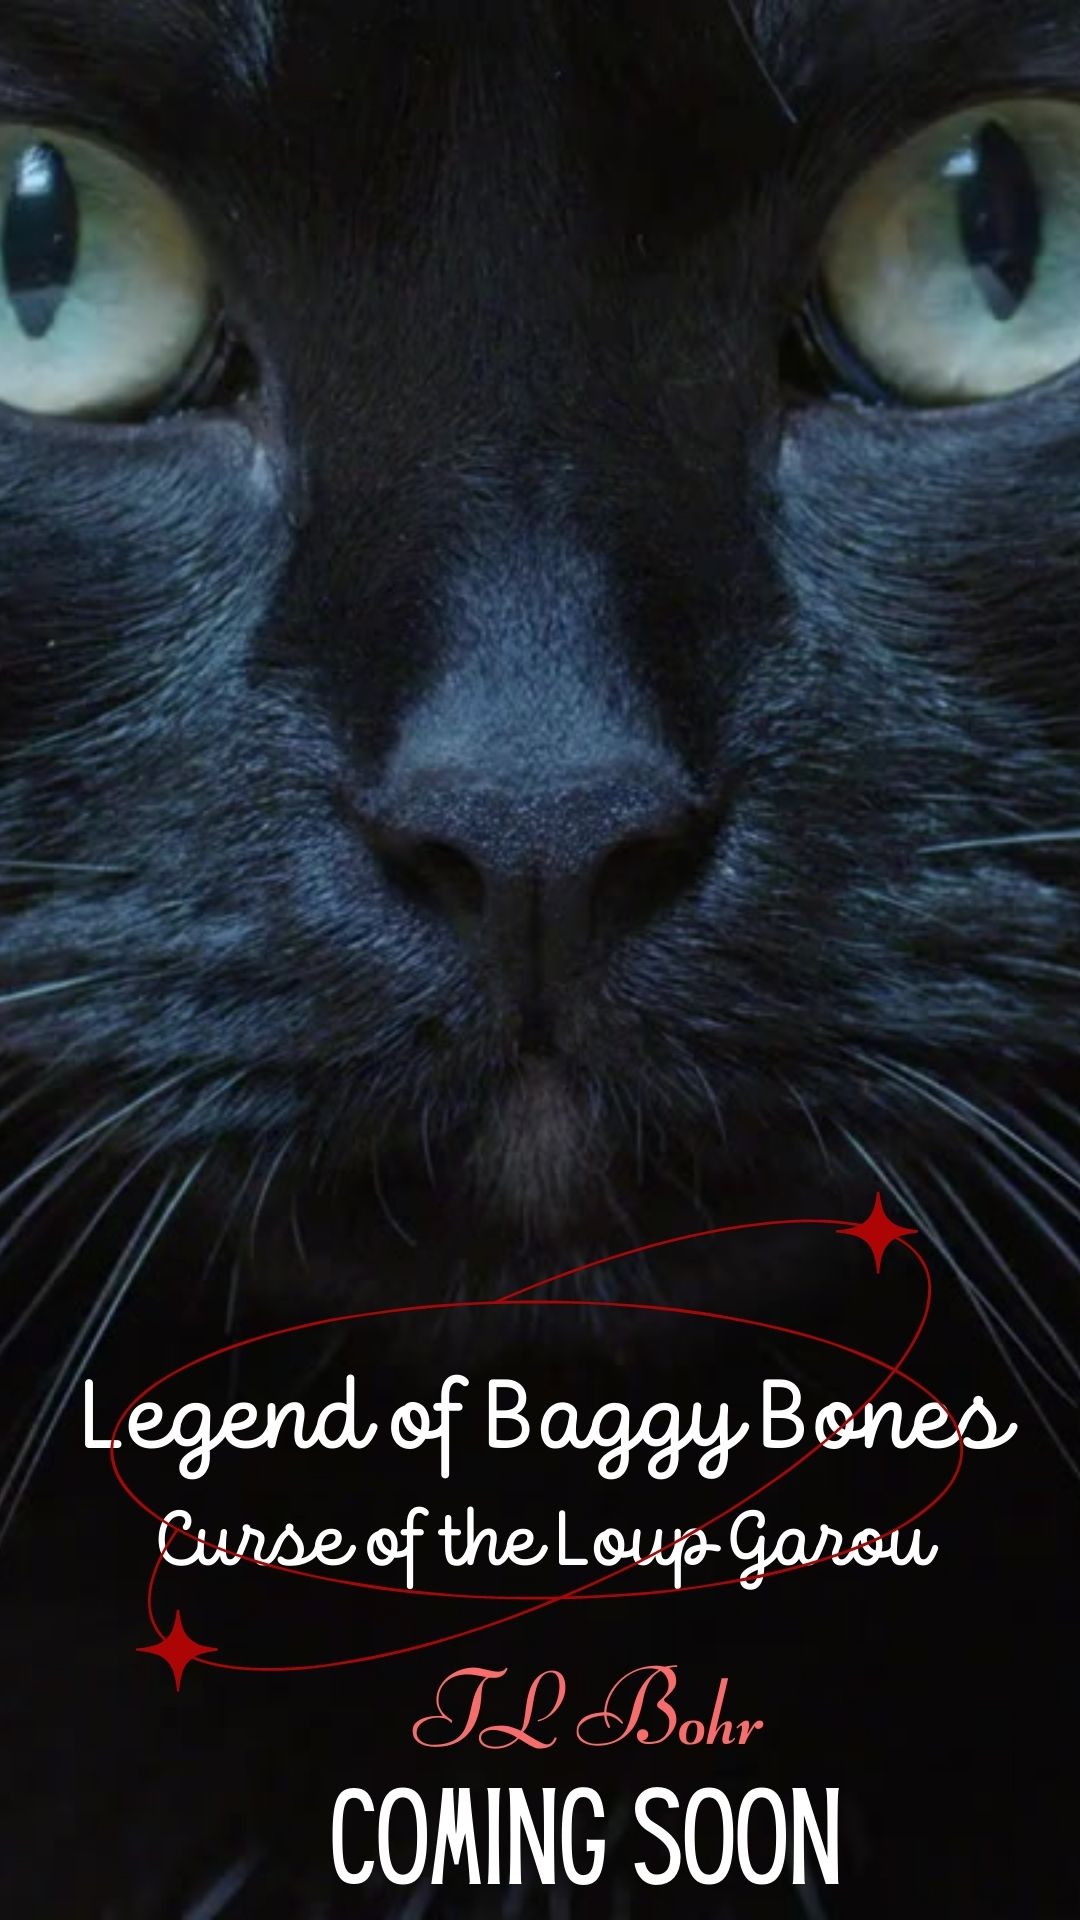 Legend of Baggy Bones Coming Soon Book Cover Video